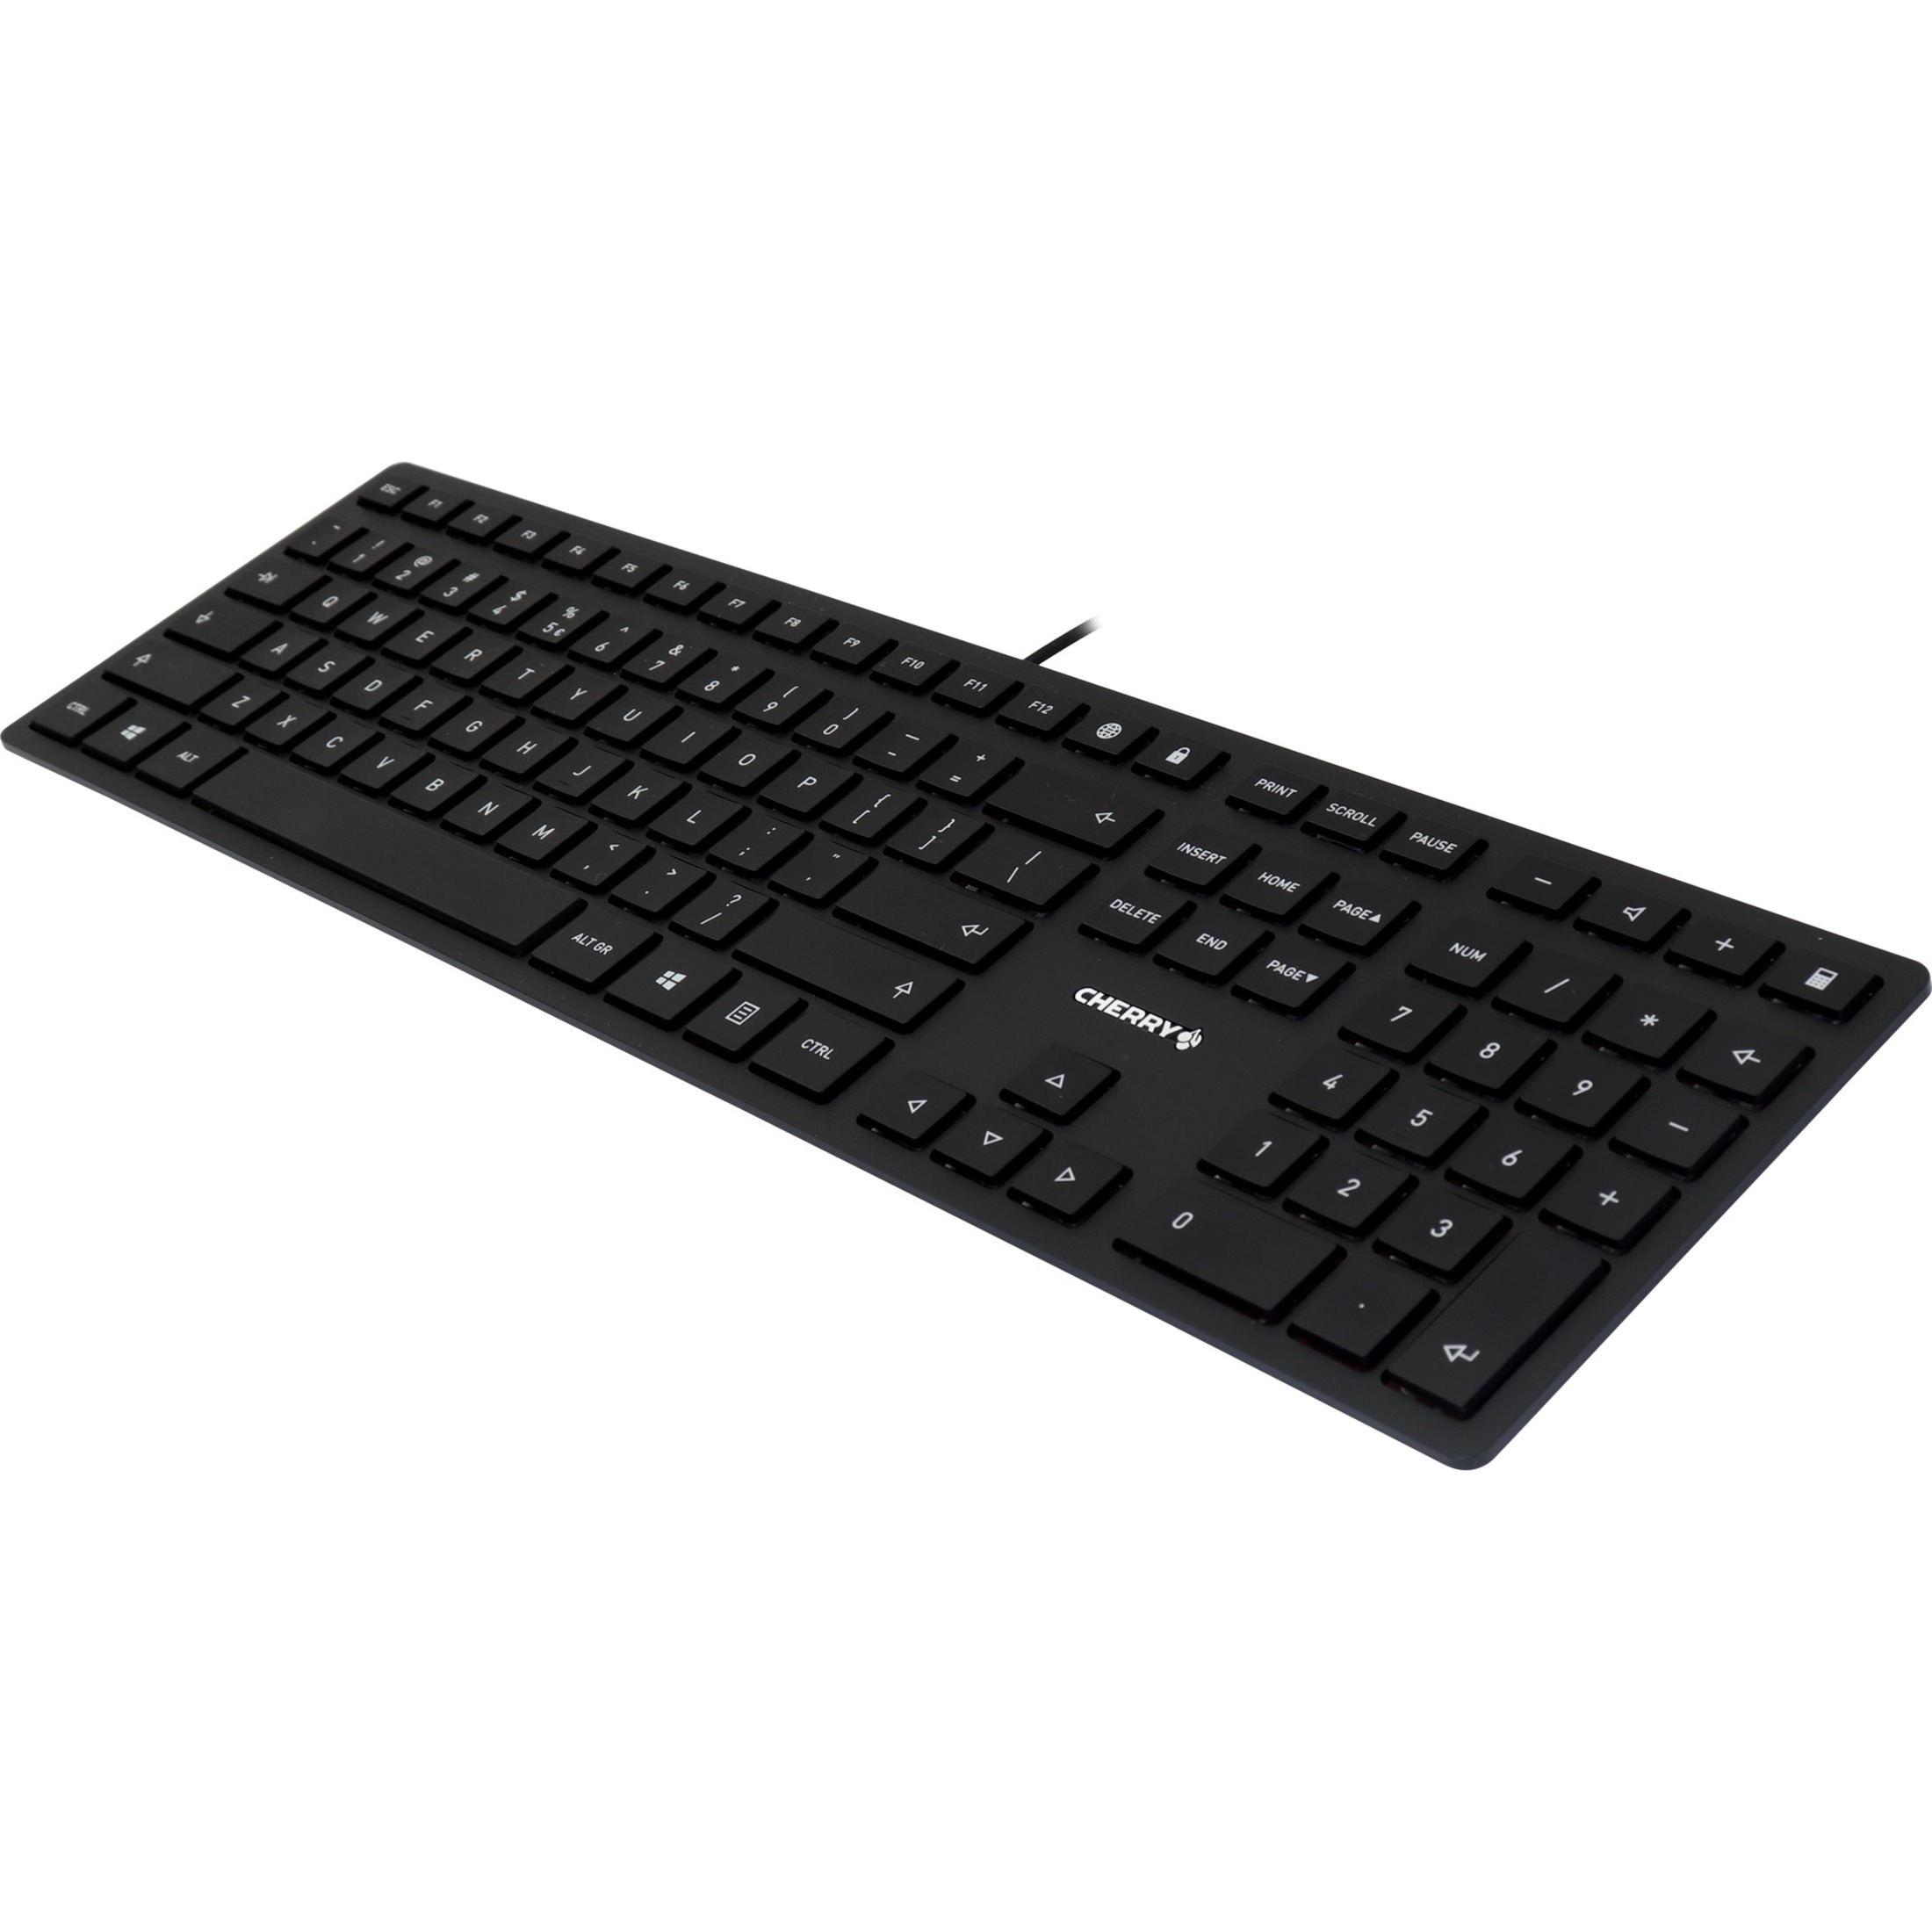 CHERRY KC 6000 SLIM Black Wired Keyboard - image 5 of 6